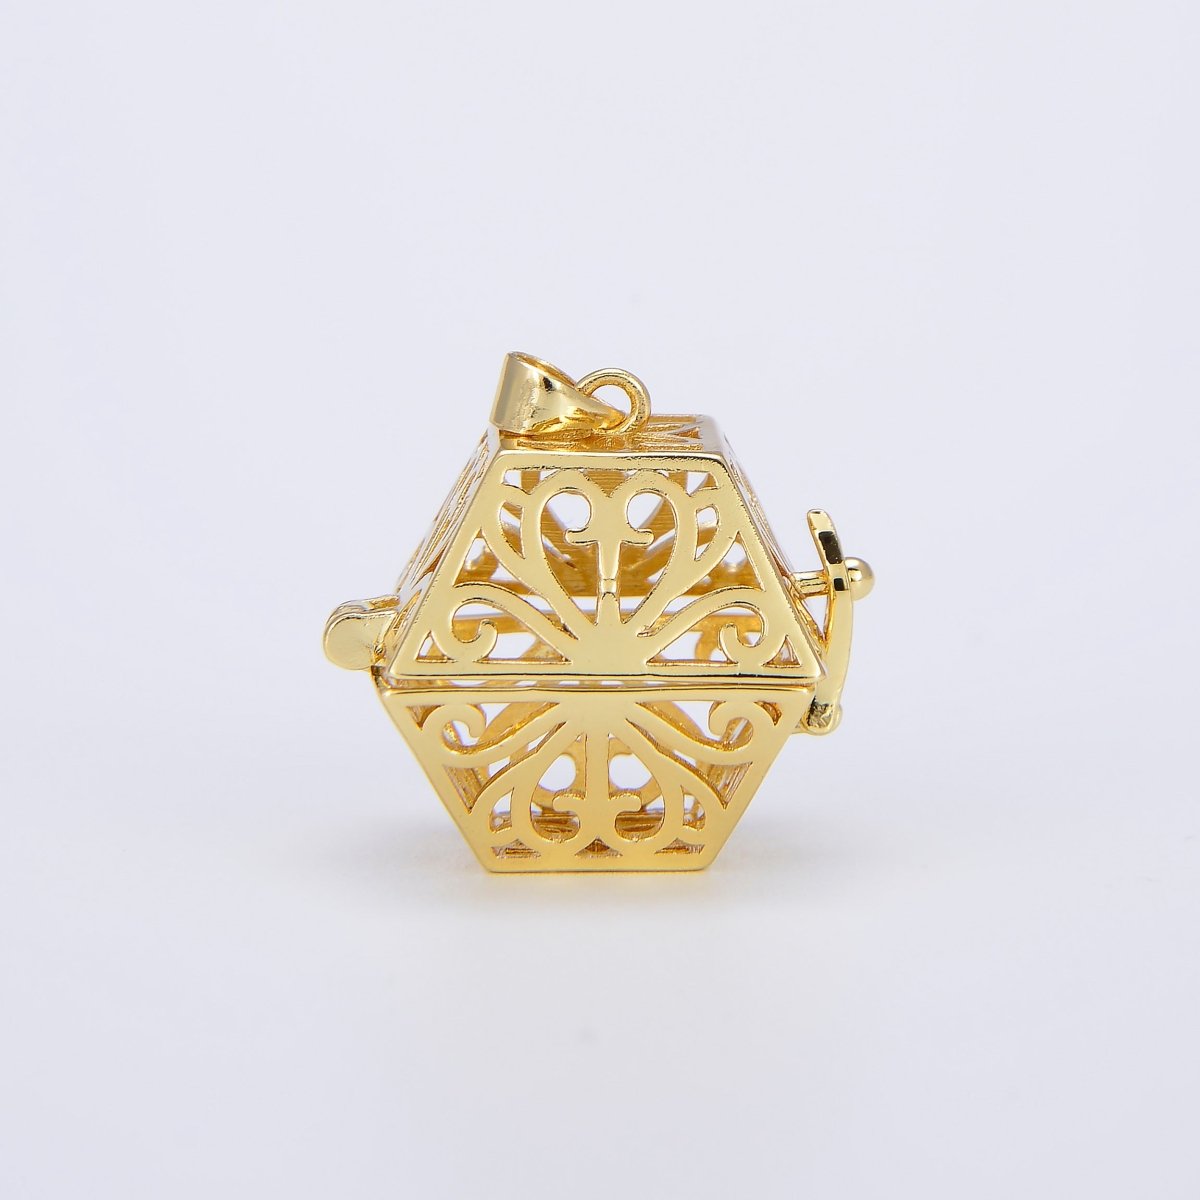 Healing Stone cage locket pendant Gold Hexagon Pendant, Gemstone Diffused Jewelry Making, DIY Gemstone Natural Stone Locket Charms necklace H-738 - DLUXCA